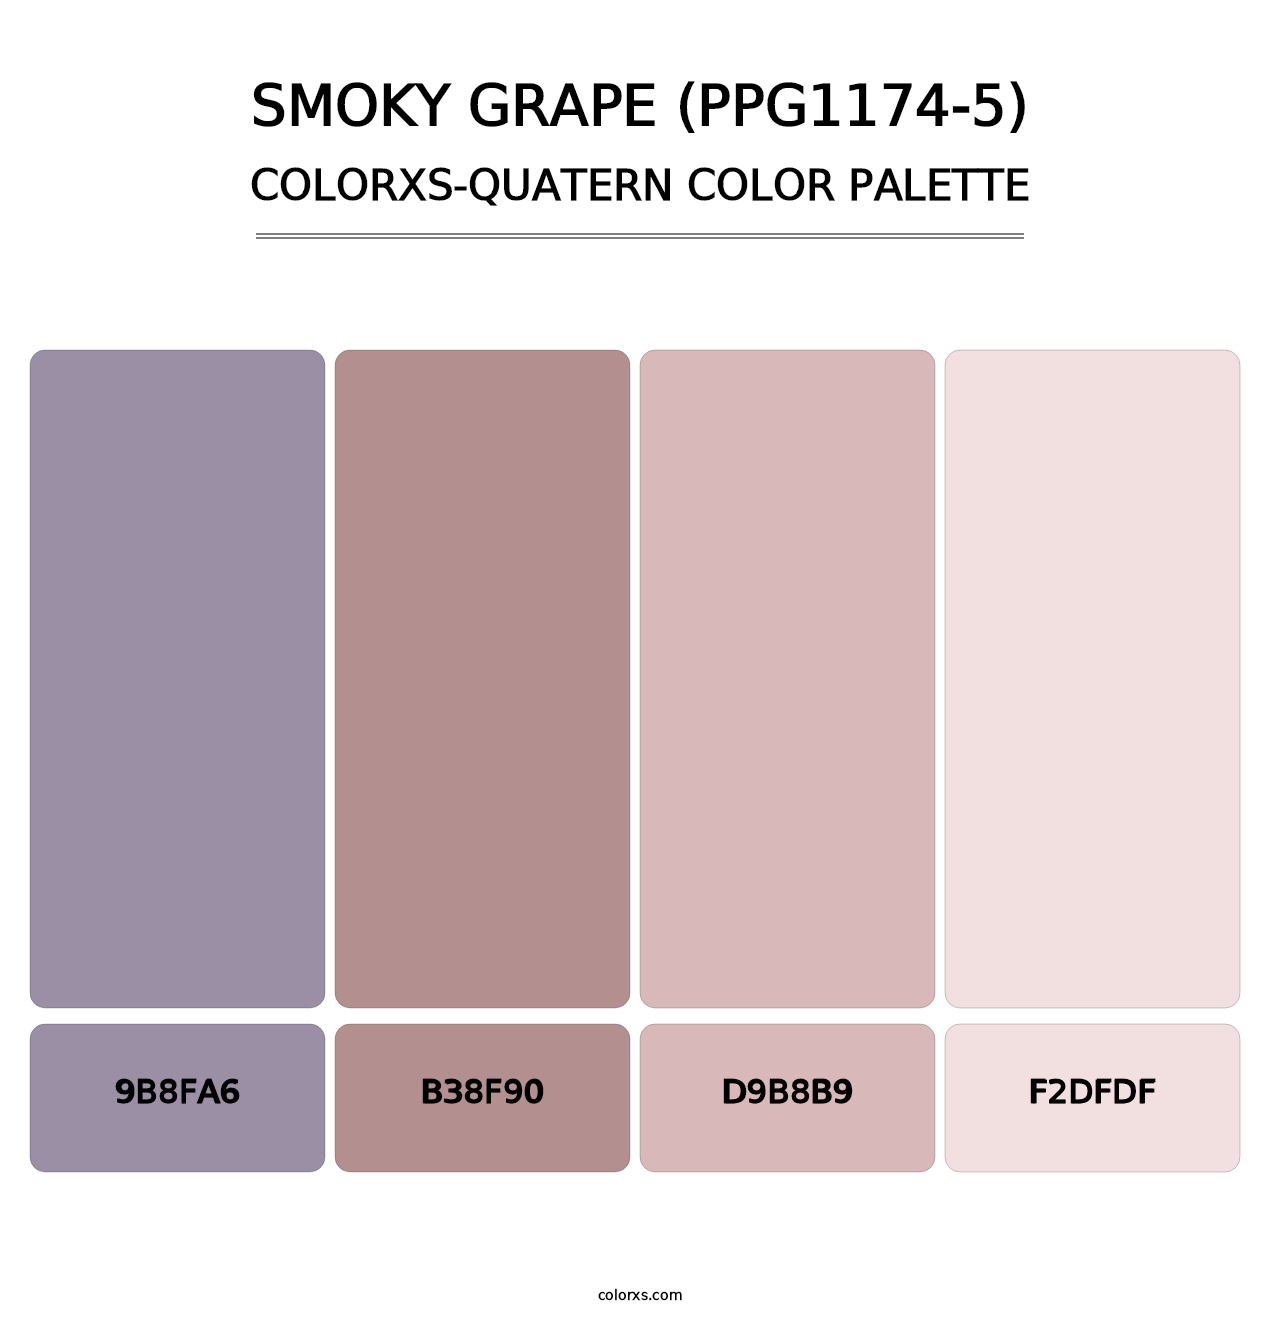 Smoky Grape (PPG1174-5) - Colorxs Quatern Palette